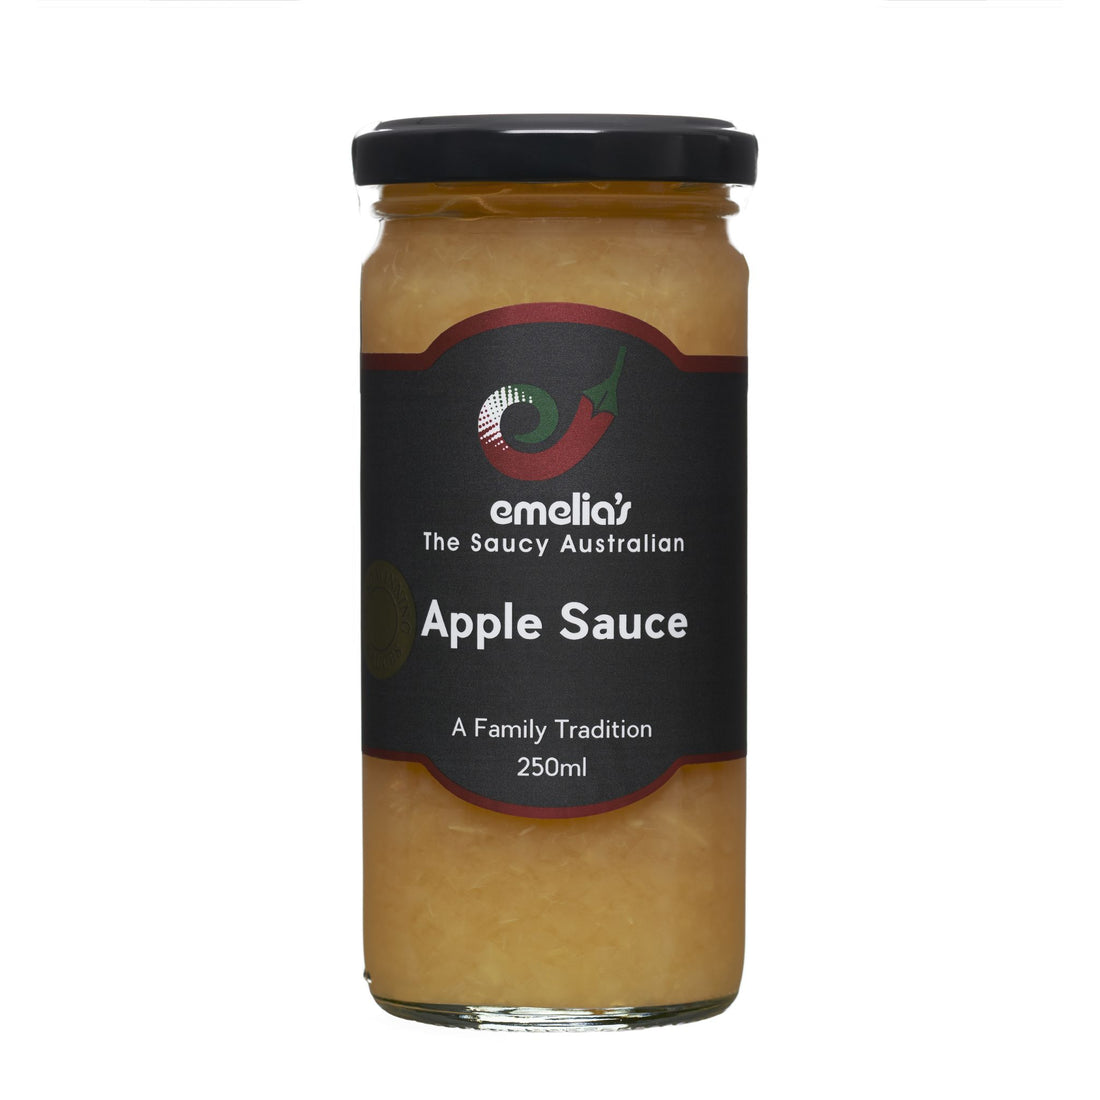 Australian Made, gluten free apple sauce facing forward